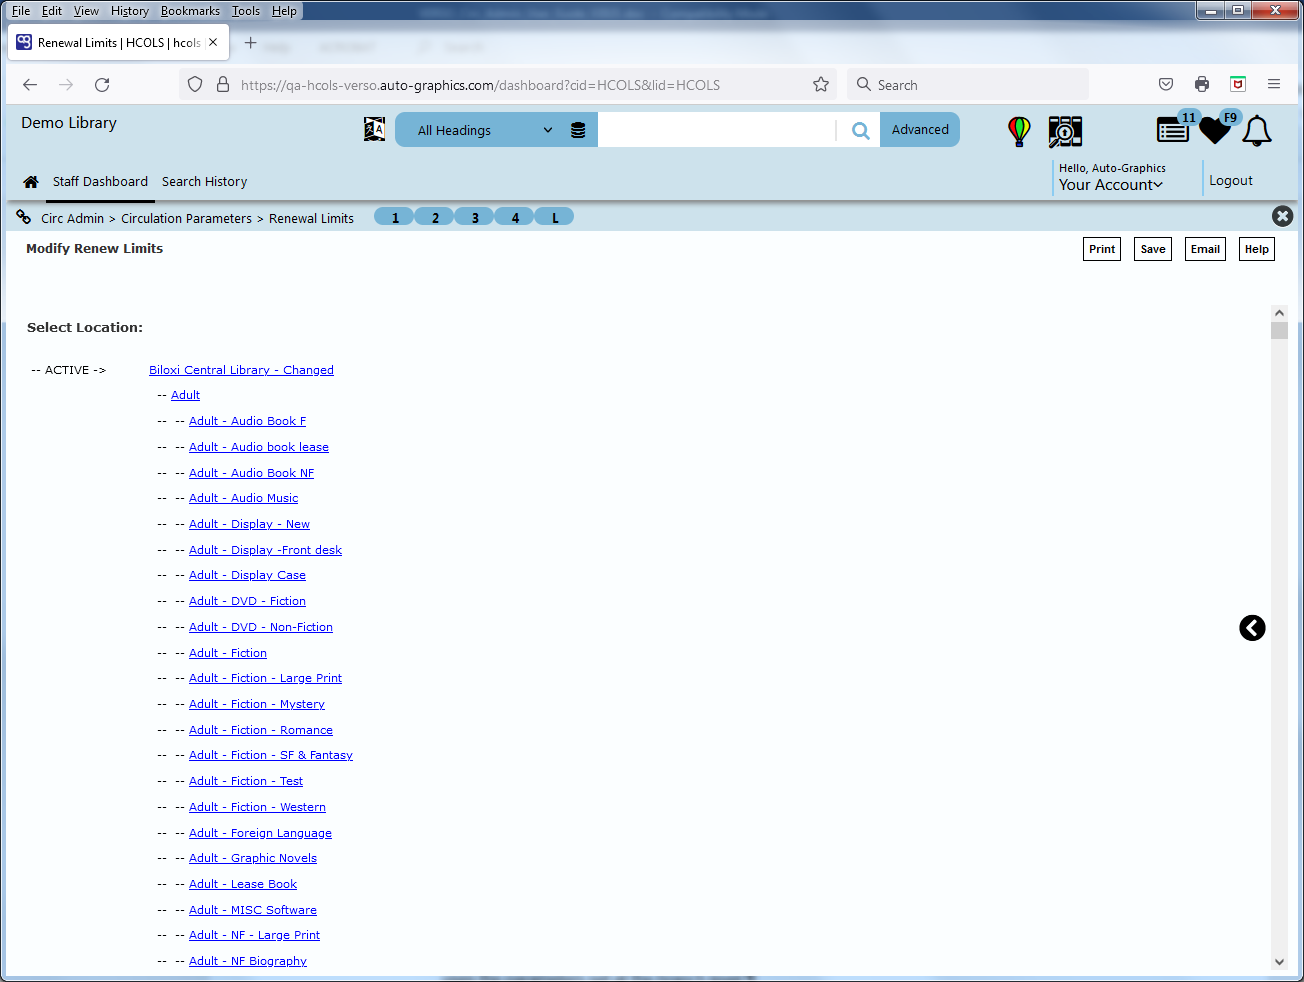 image of Modify Renewal Limits - Select Location Screen